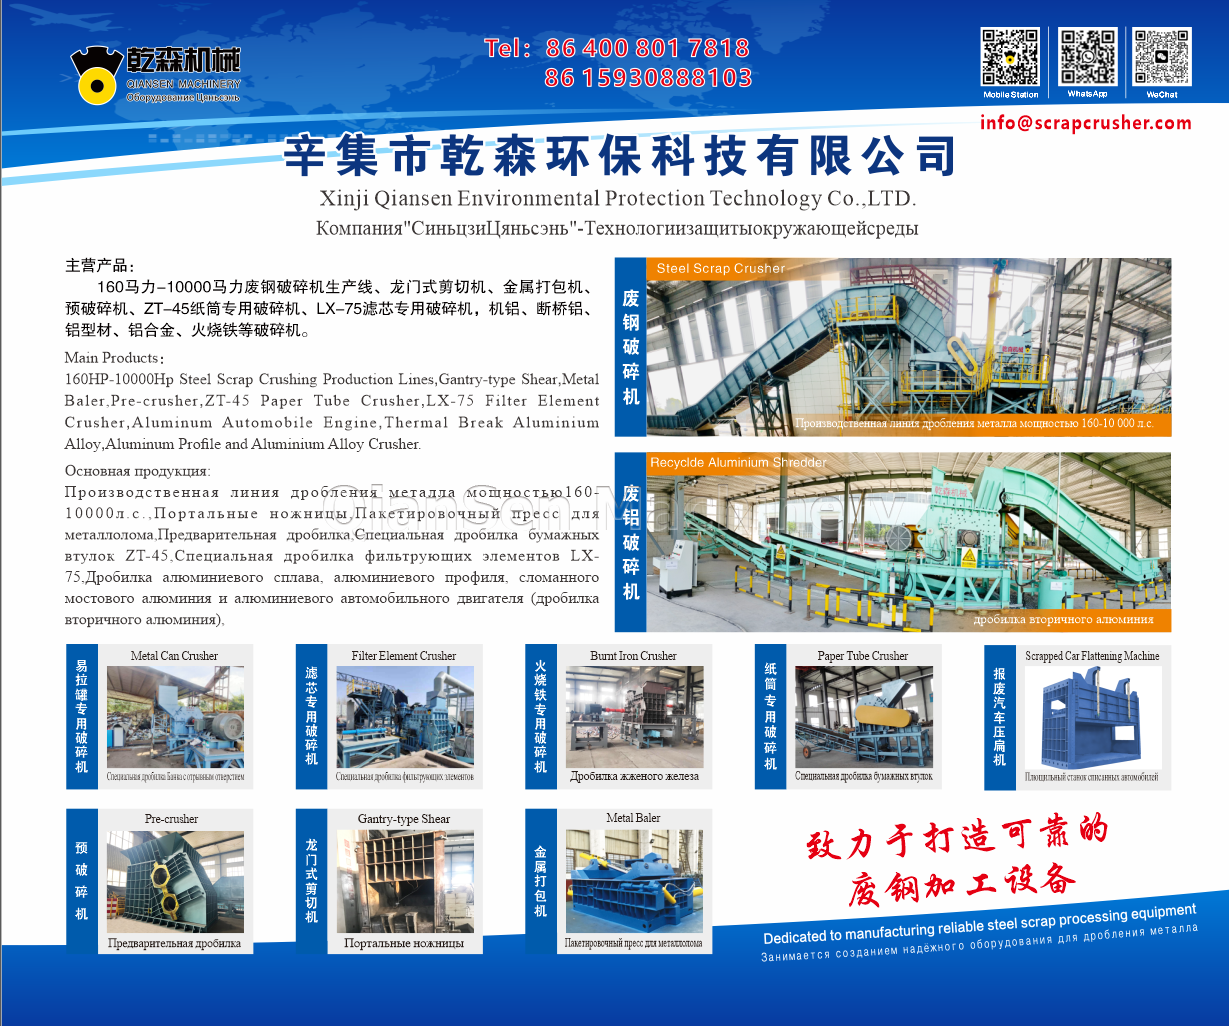 Qiansen Machinery attend the 